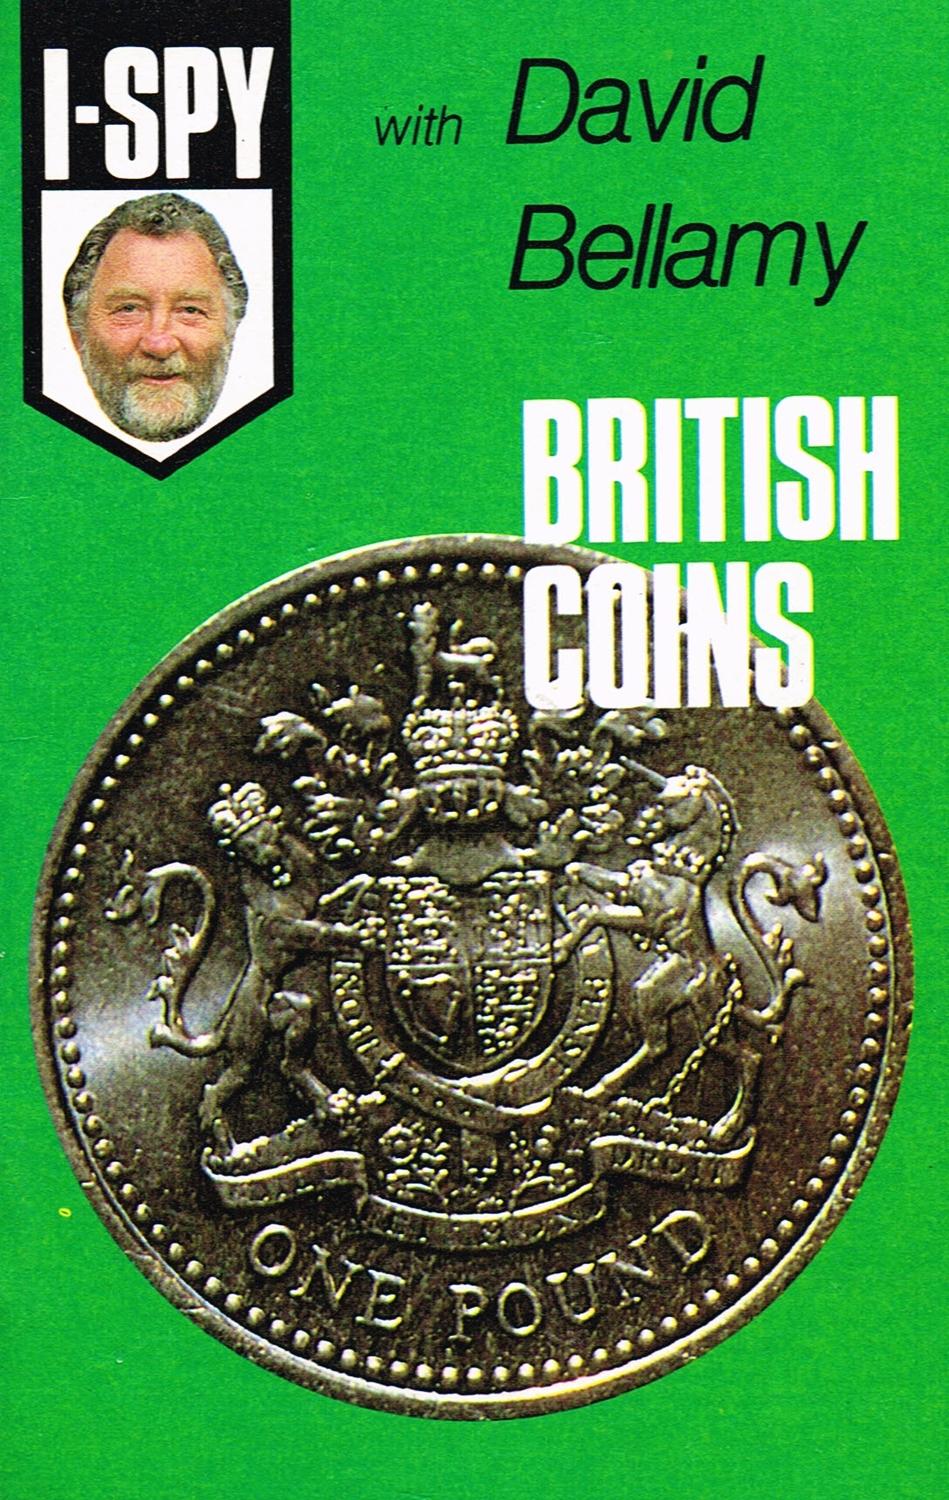 I-SPY: British Coins with David Bellamy (Ravette/I-SPY Books) (image0